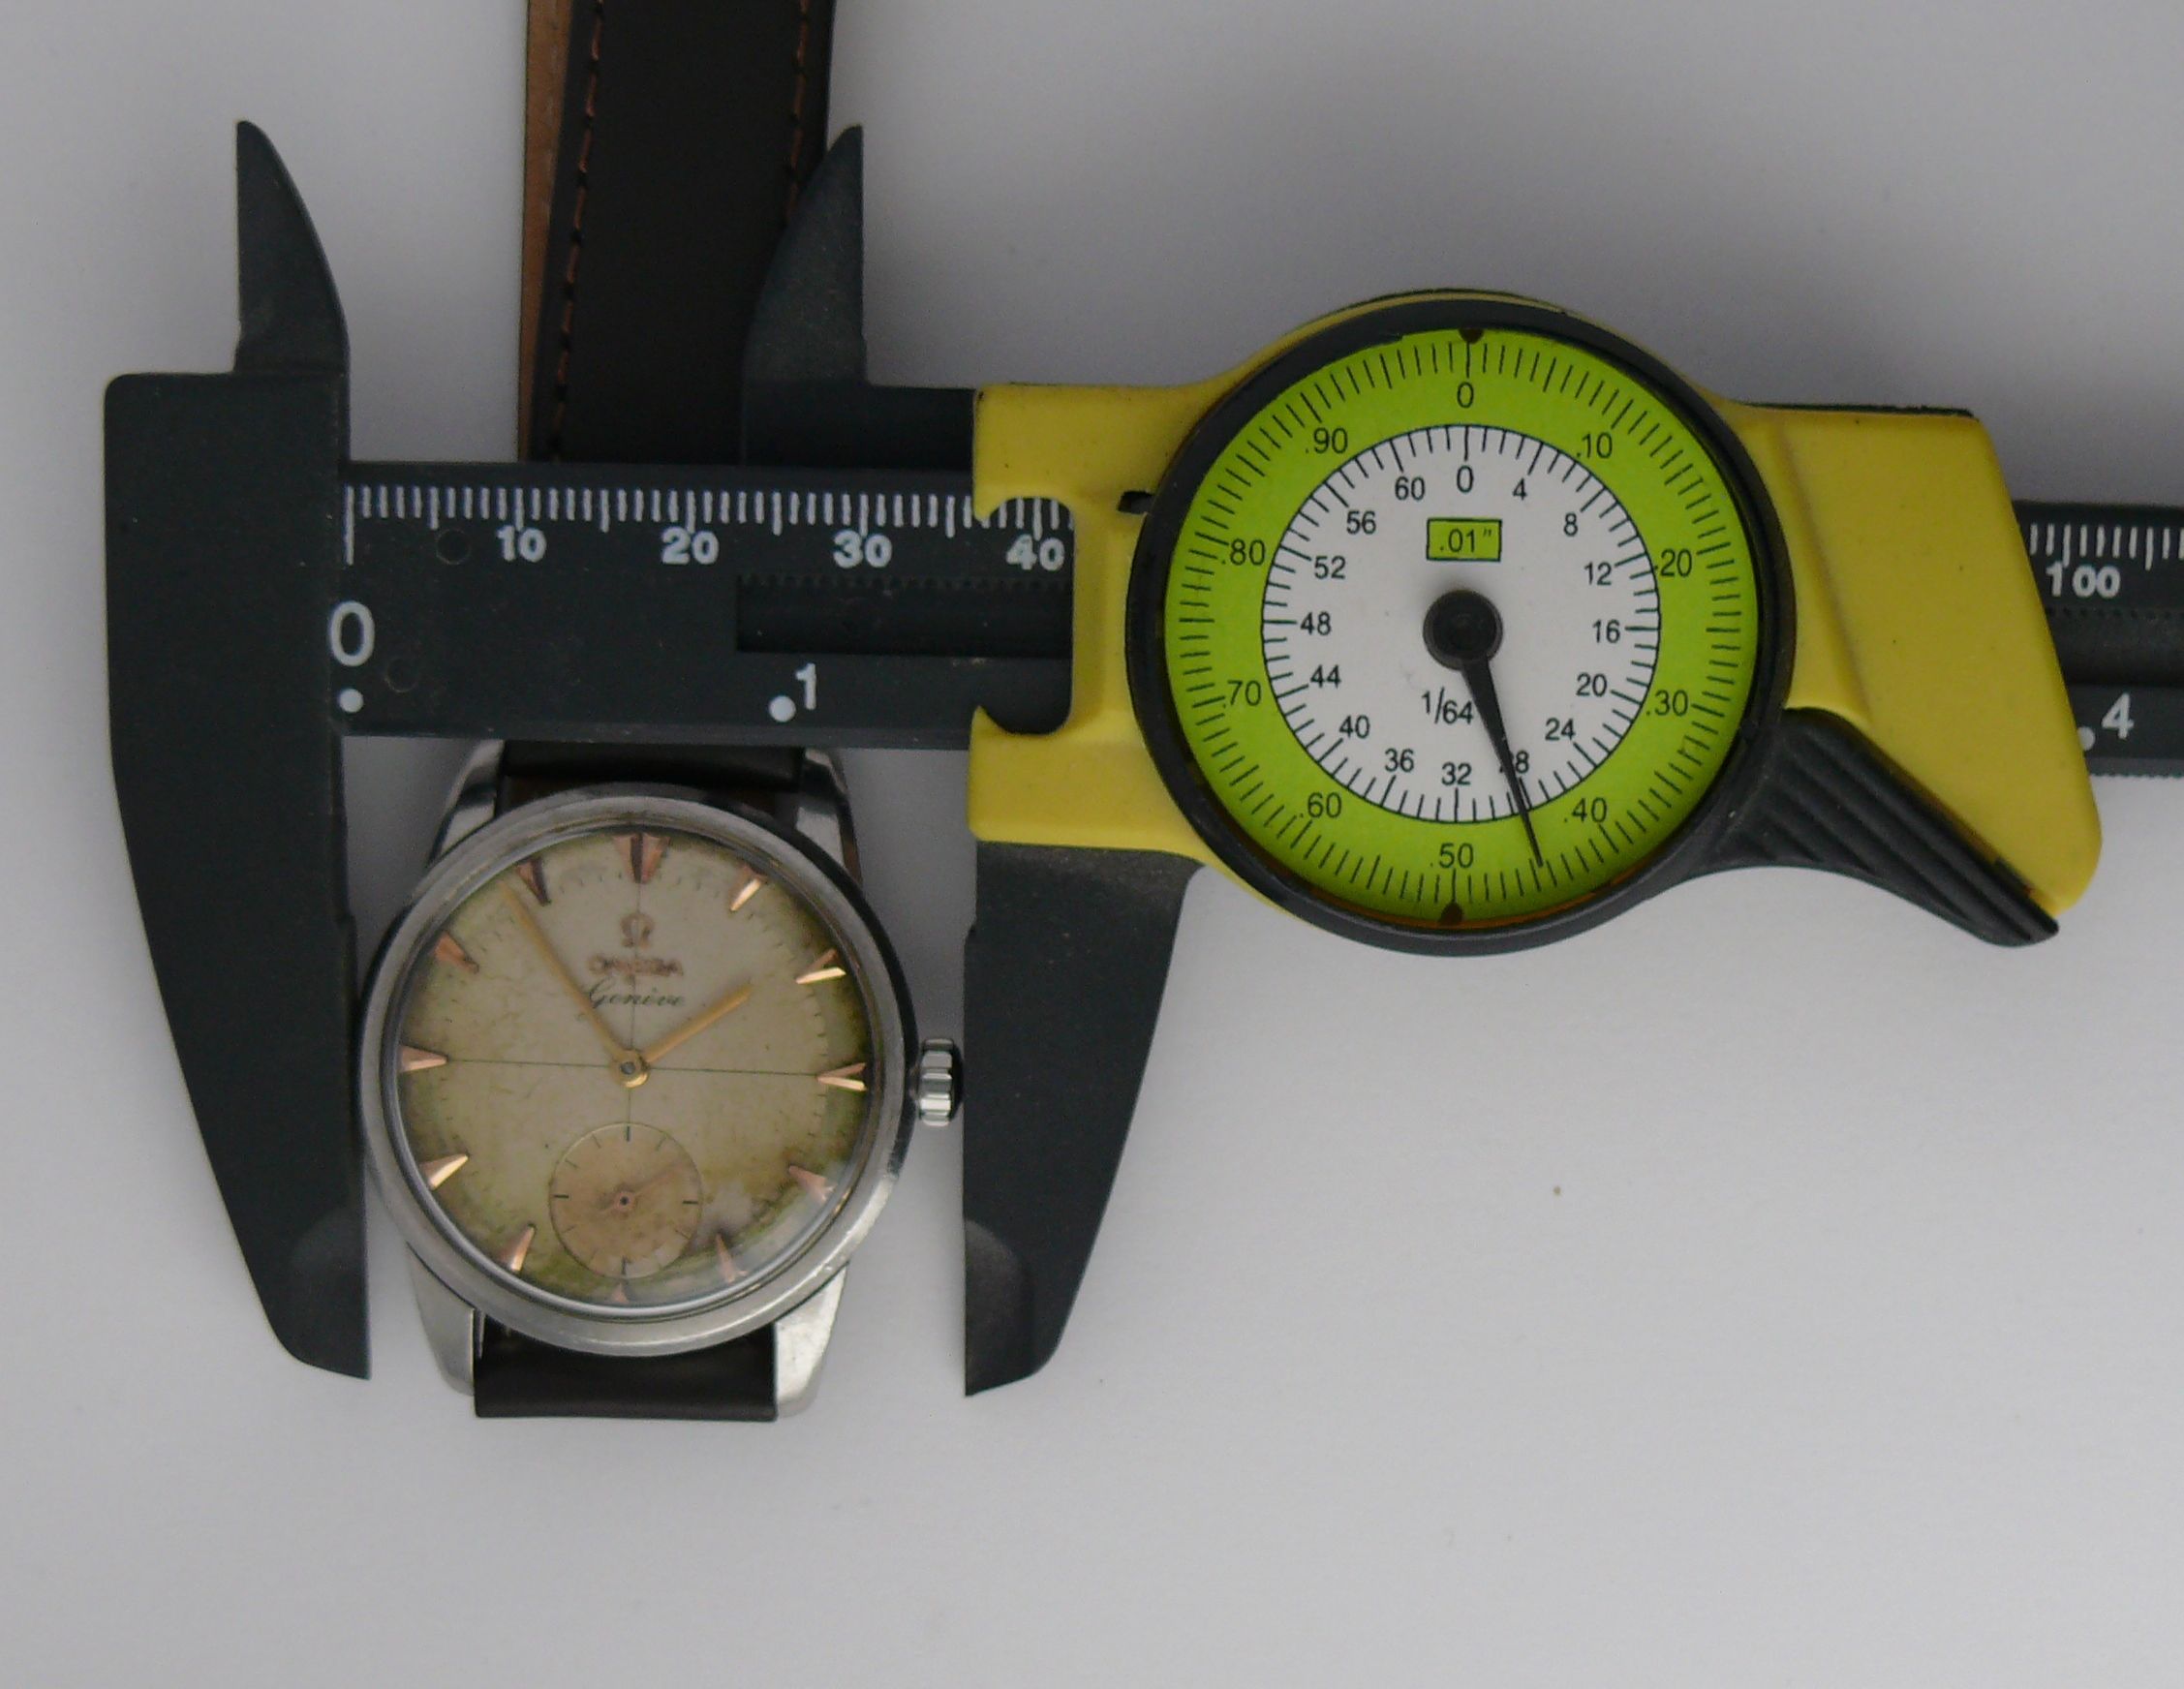 1959 Vintage Gents Omega Geneva Manual Wind Wristwatch Ref 2903. Original dial shows even patina - Image 7 of 7